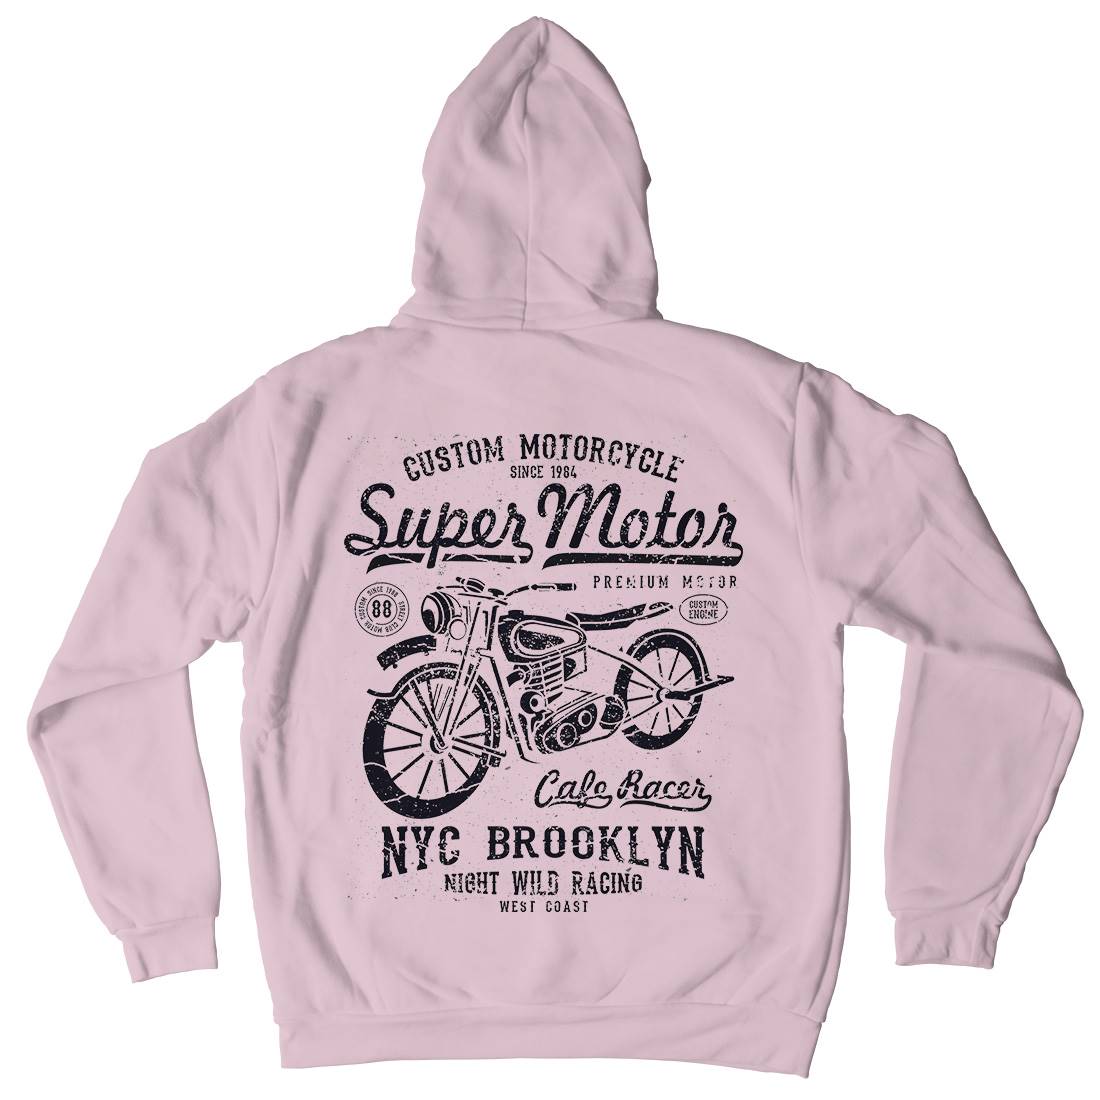 Super Motor Kids Crew Neck Hoodie Motorcycles A166